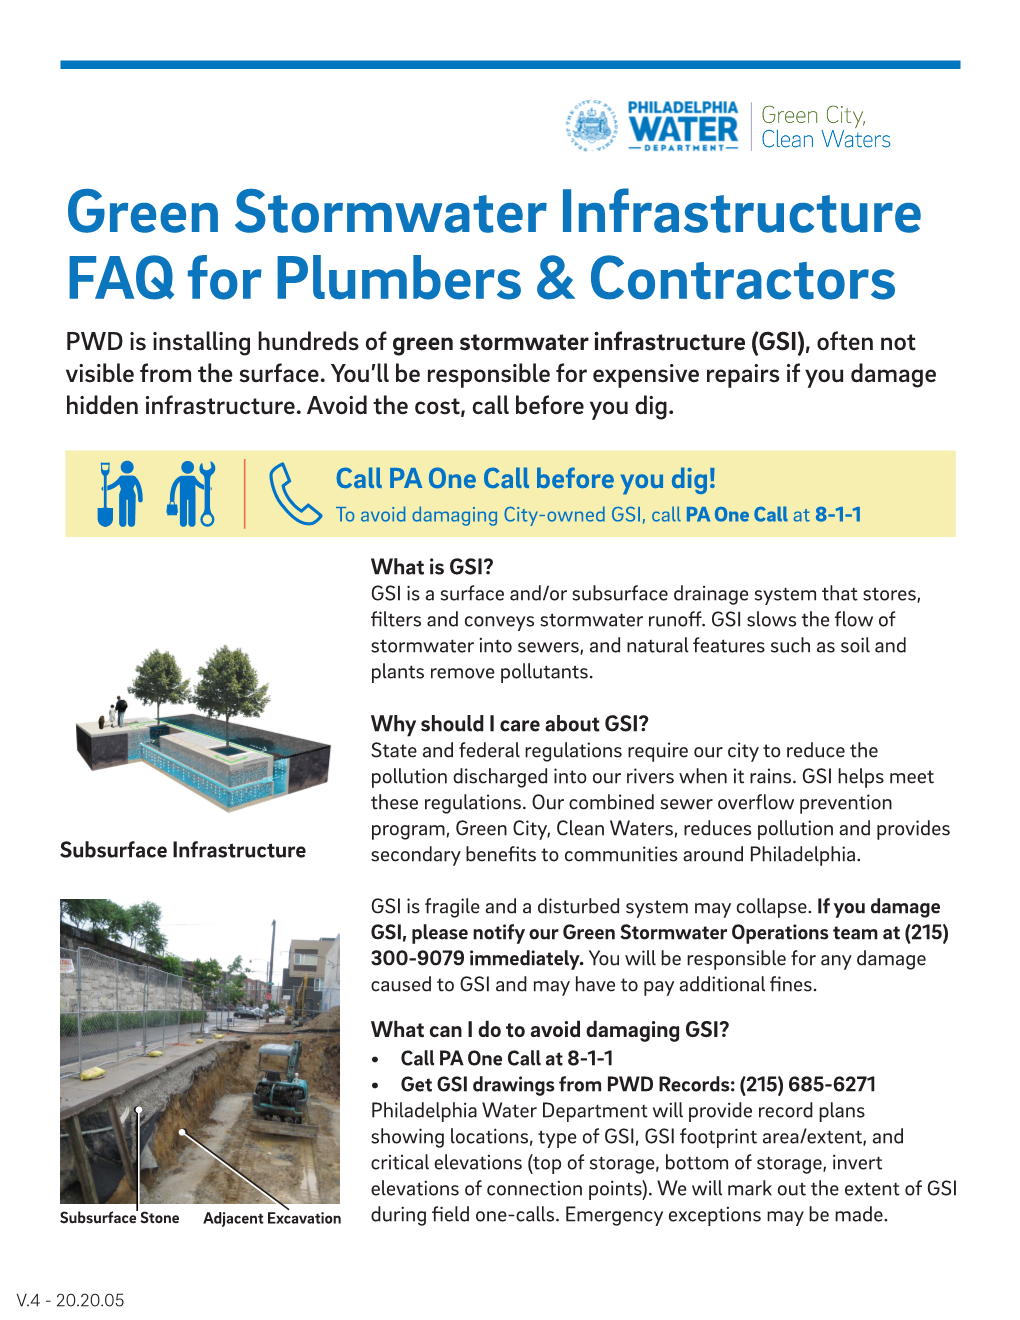 Green Stormwater Infrastructure FAQ for Plumbers & Contractors